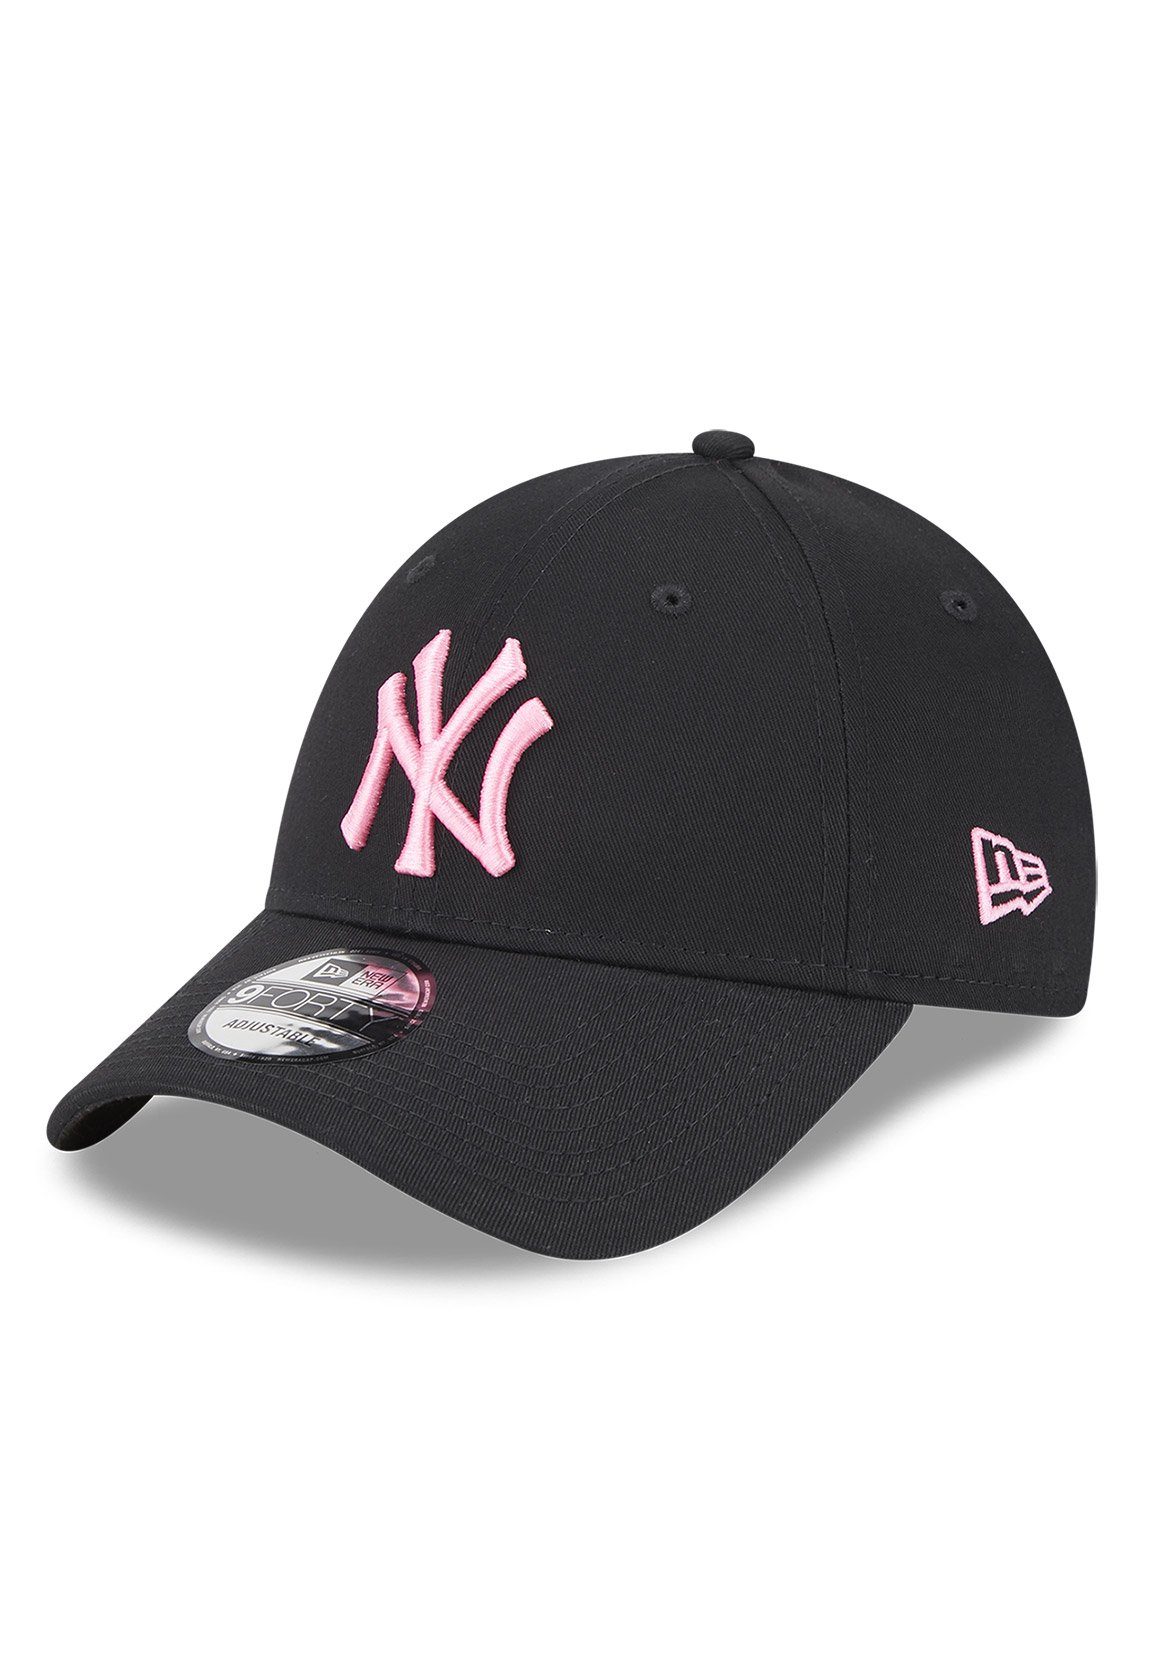 New Era Baseball Cap Pink New Adjustable Neon NY 9Forty Era schwarz-pink YANKEES Schwarz Cap